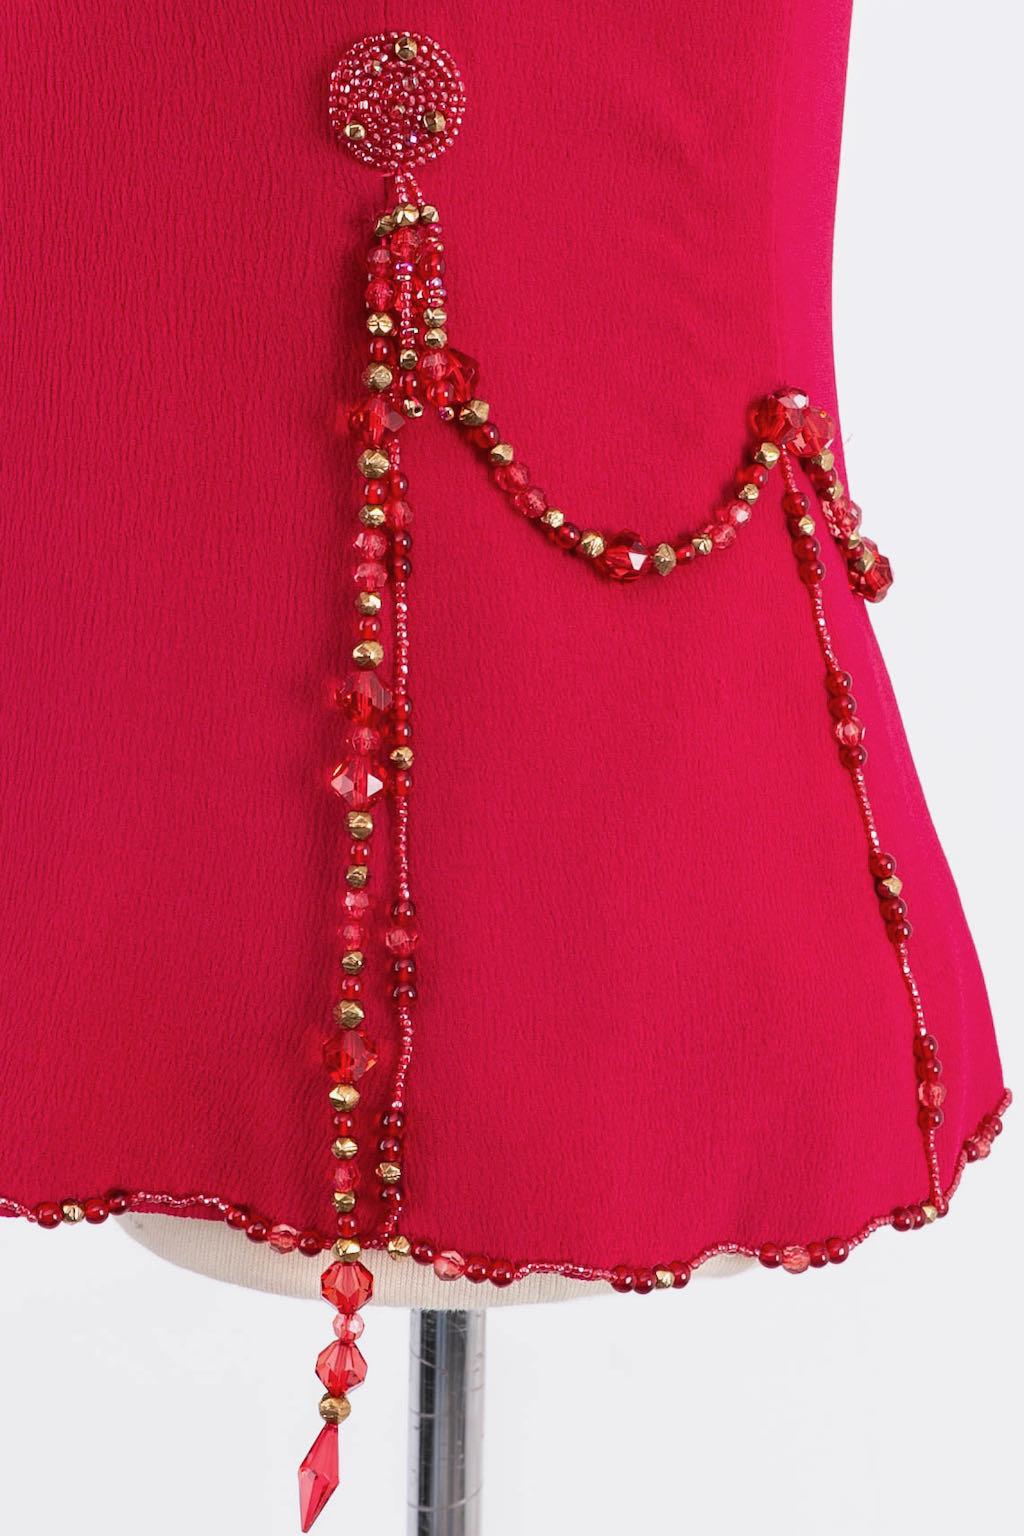 Emanuel Ungaro Haute Couture Pink Silk Chiffon Set For Sale 9